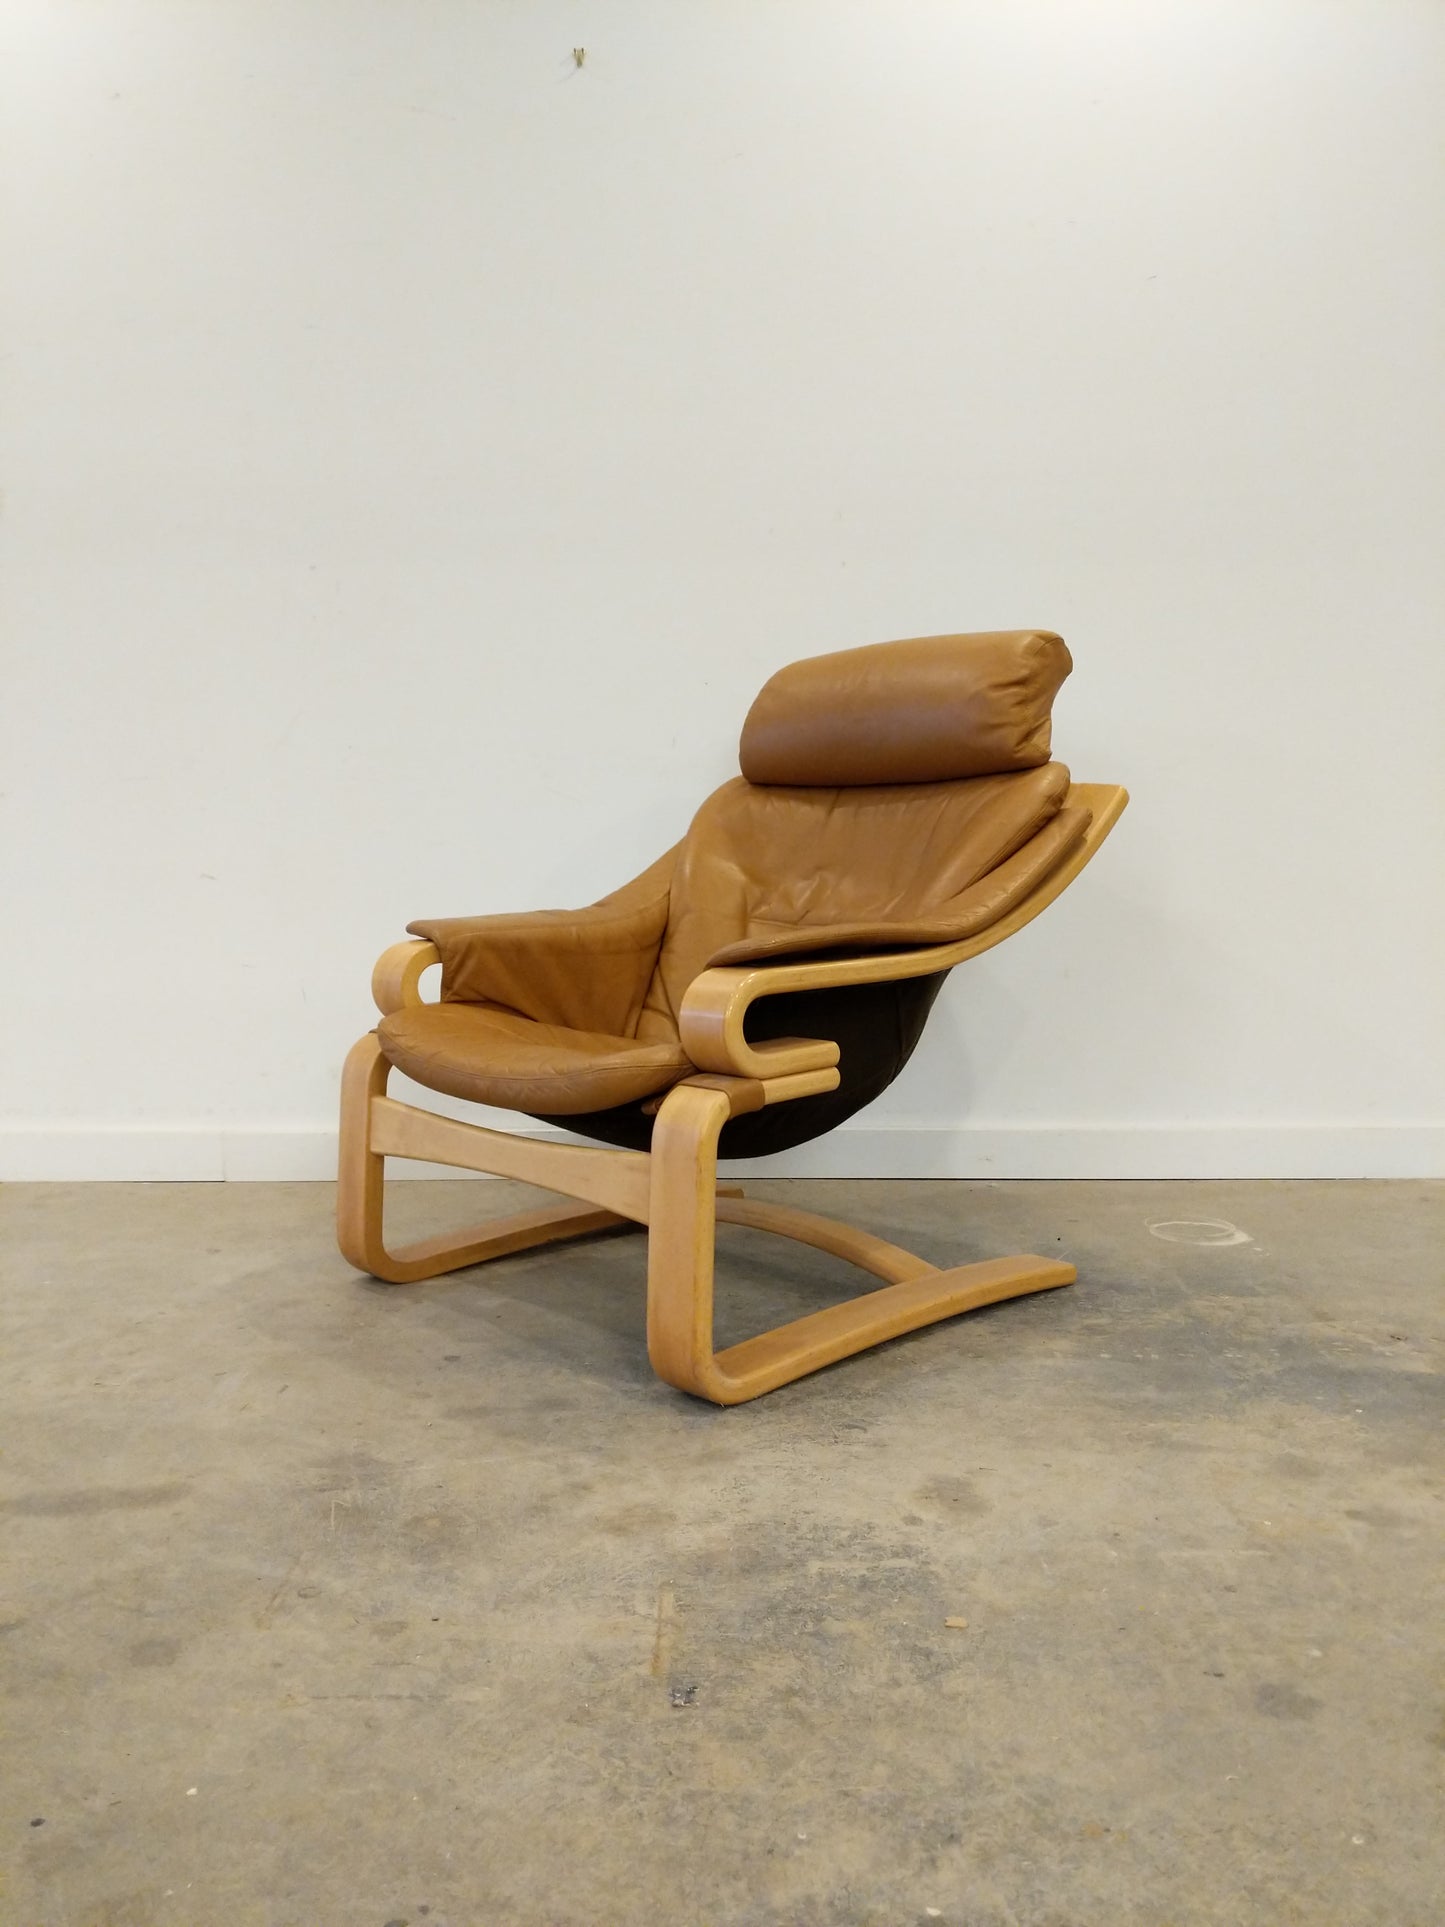 Vintage Danish Modern Lounge Chair by Svend Skipper